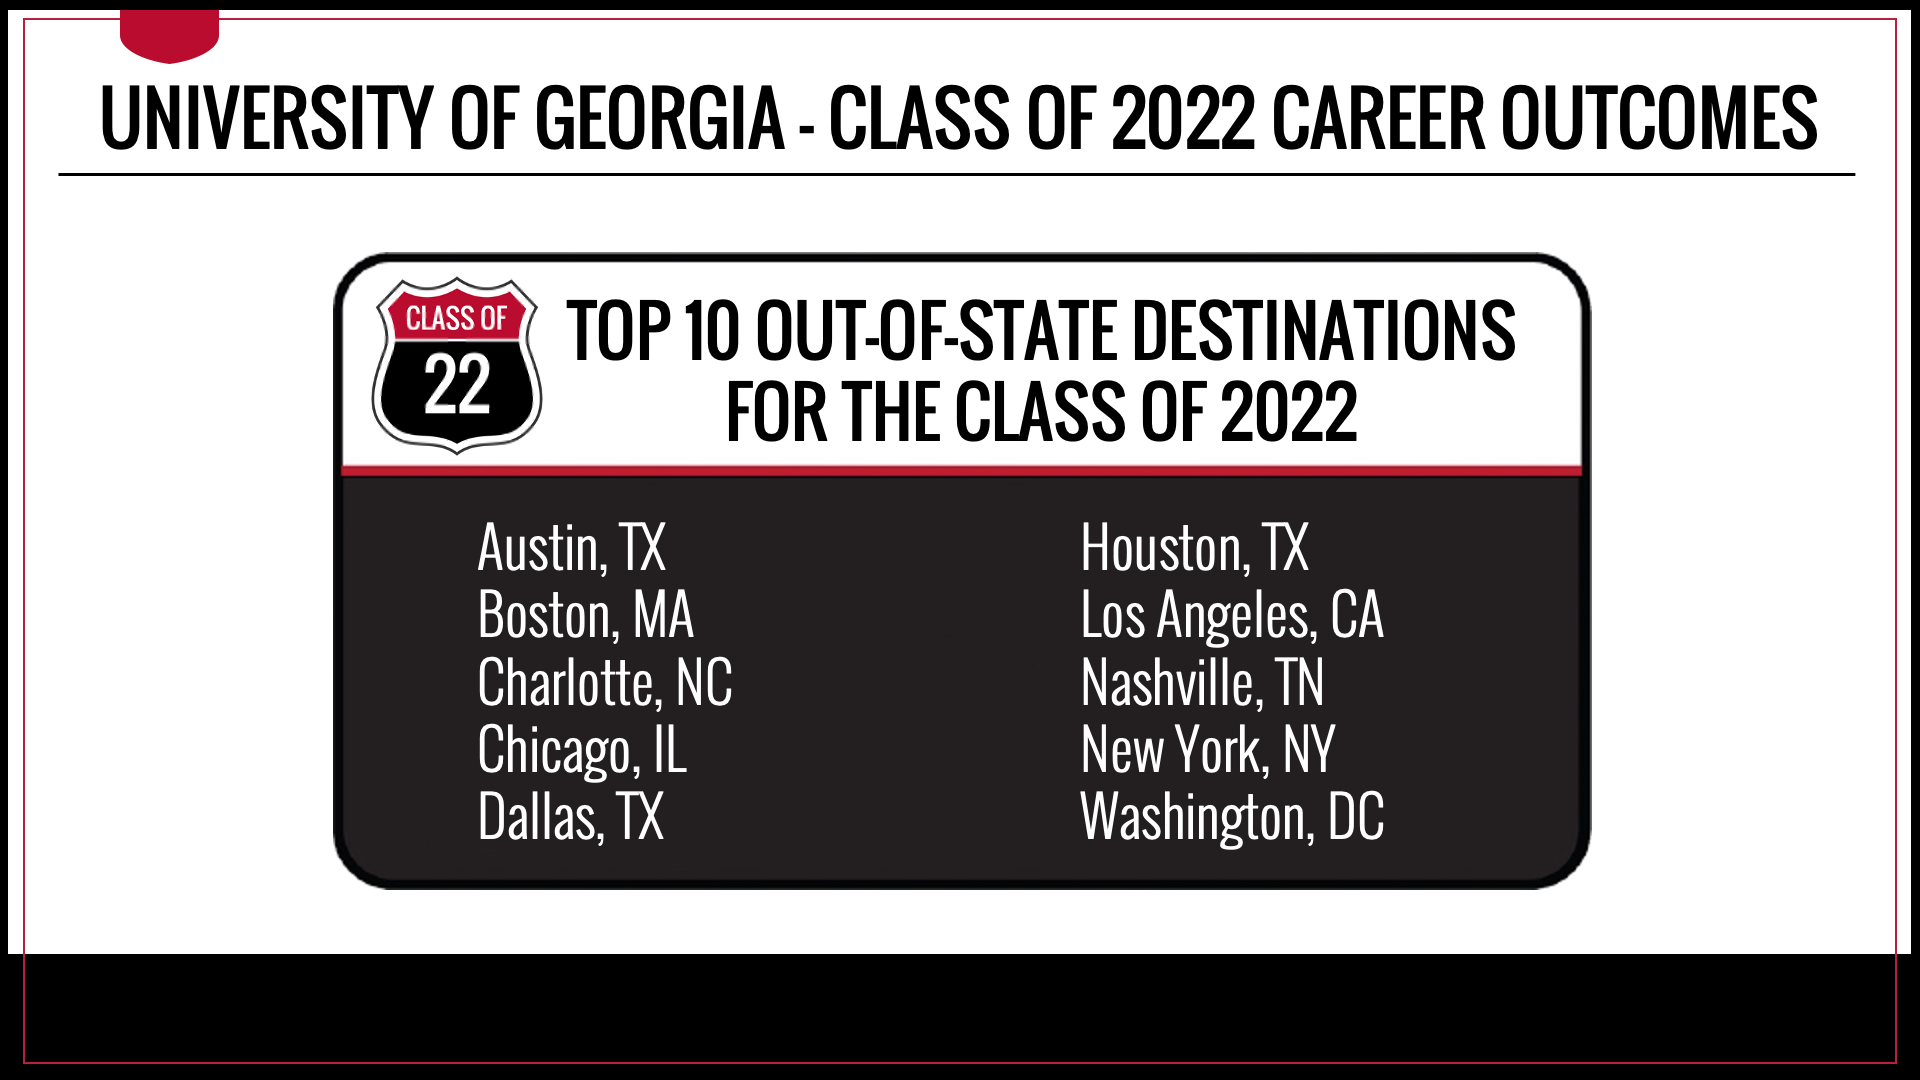 Top Out-of-State destinations for UGA Class of 2022 graduates include: Austin, TX - Boston, MA - Charlotte, NC - Chicago, IL - Dallas, TX - Houston, TX - Los Angeles, CA - Nashville, TN - New York, NY - Washington, DC